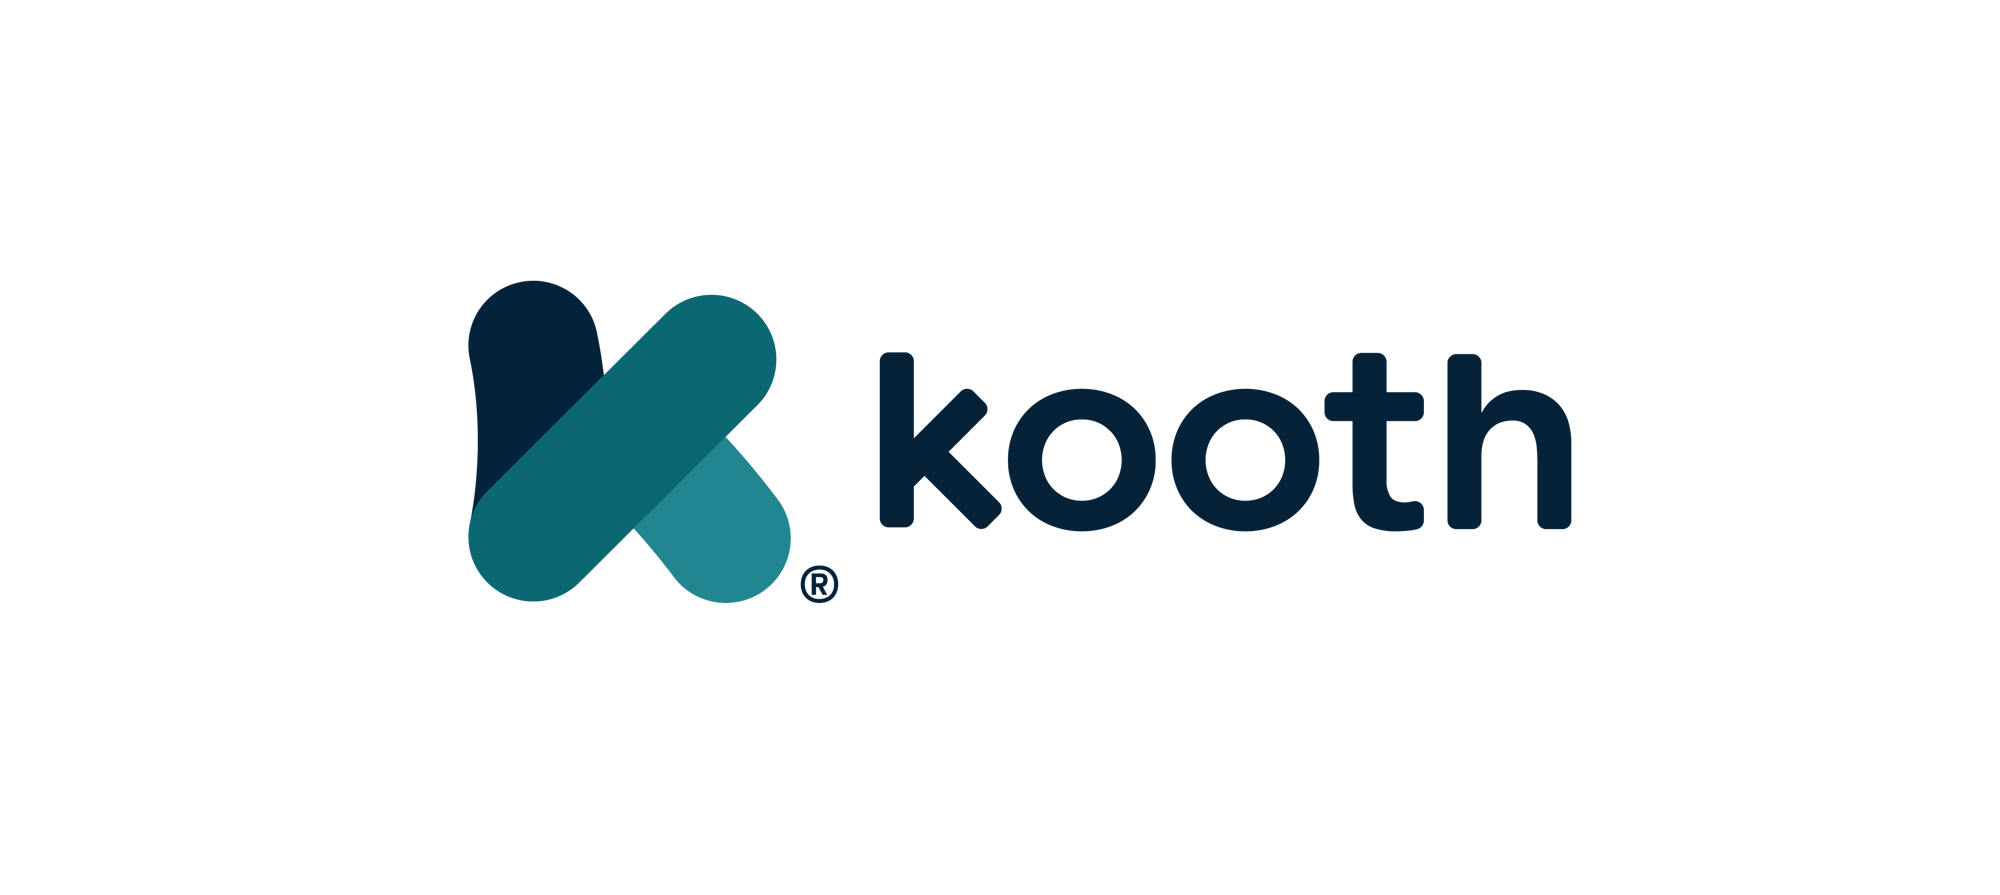 Kooth_Logo-family_Kooth Wordmark Registered Horizontal